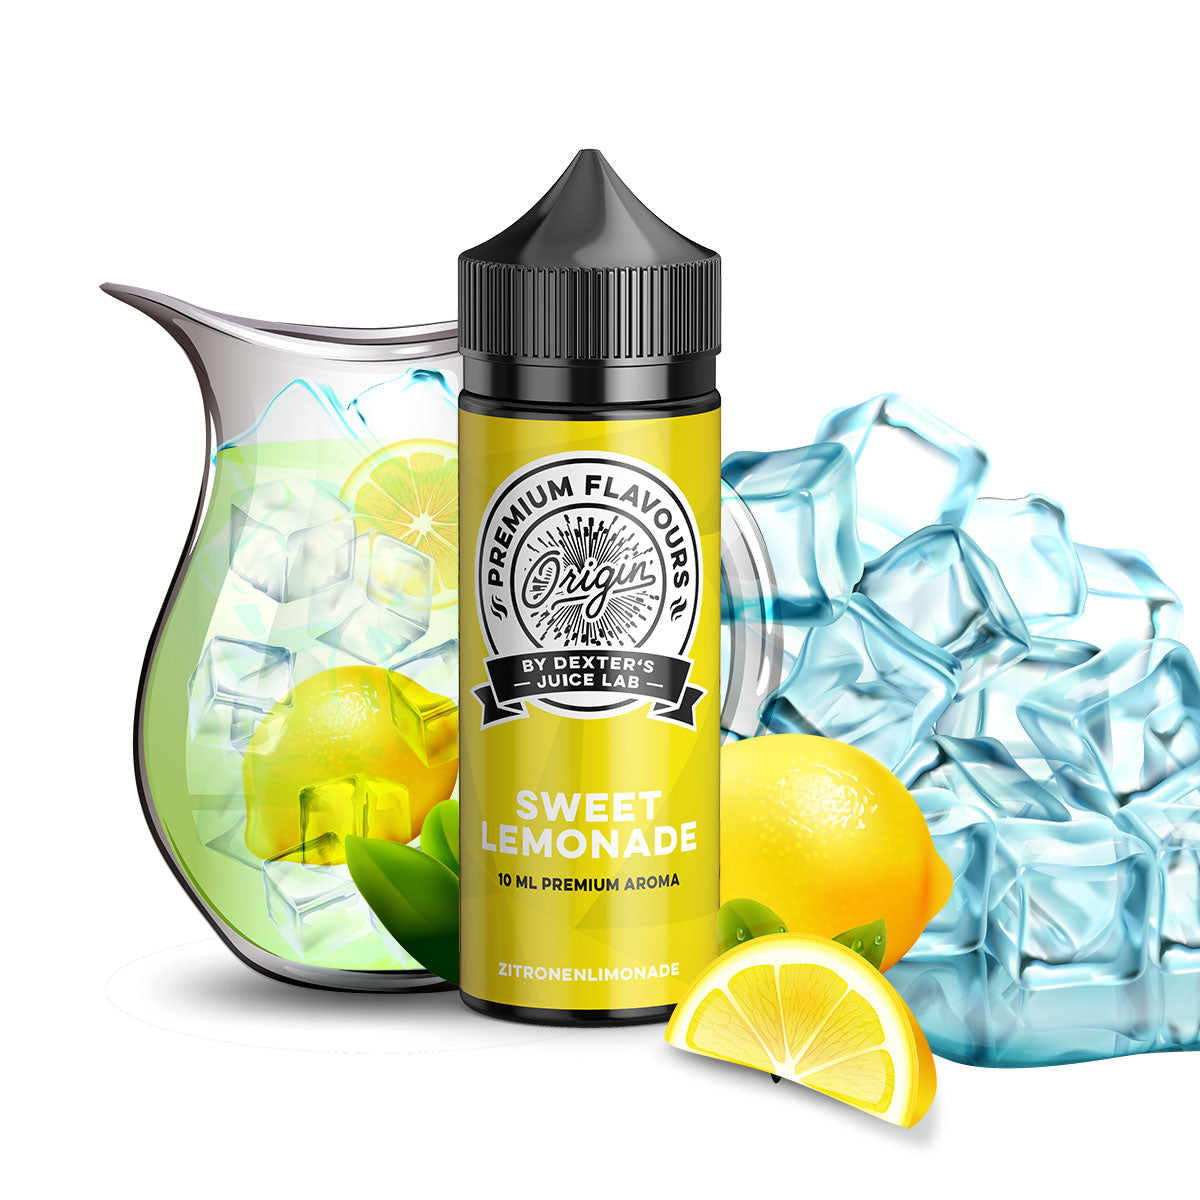 Dexter's Juice Lab Origin Sweet Lemonade Aroma 10ml